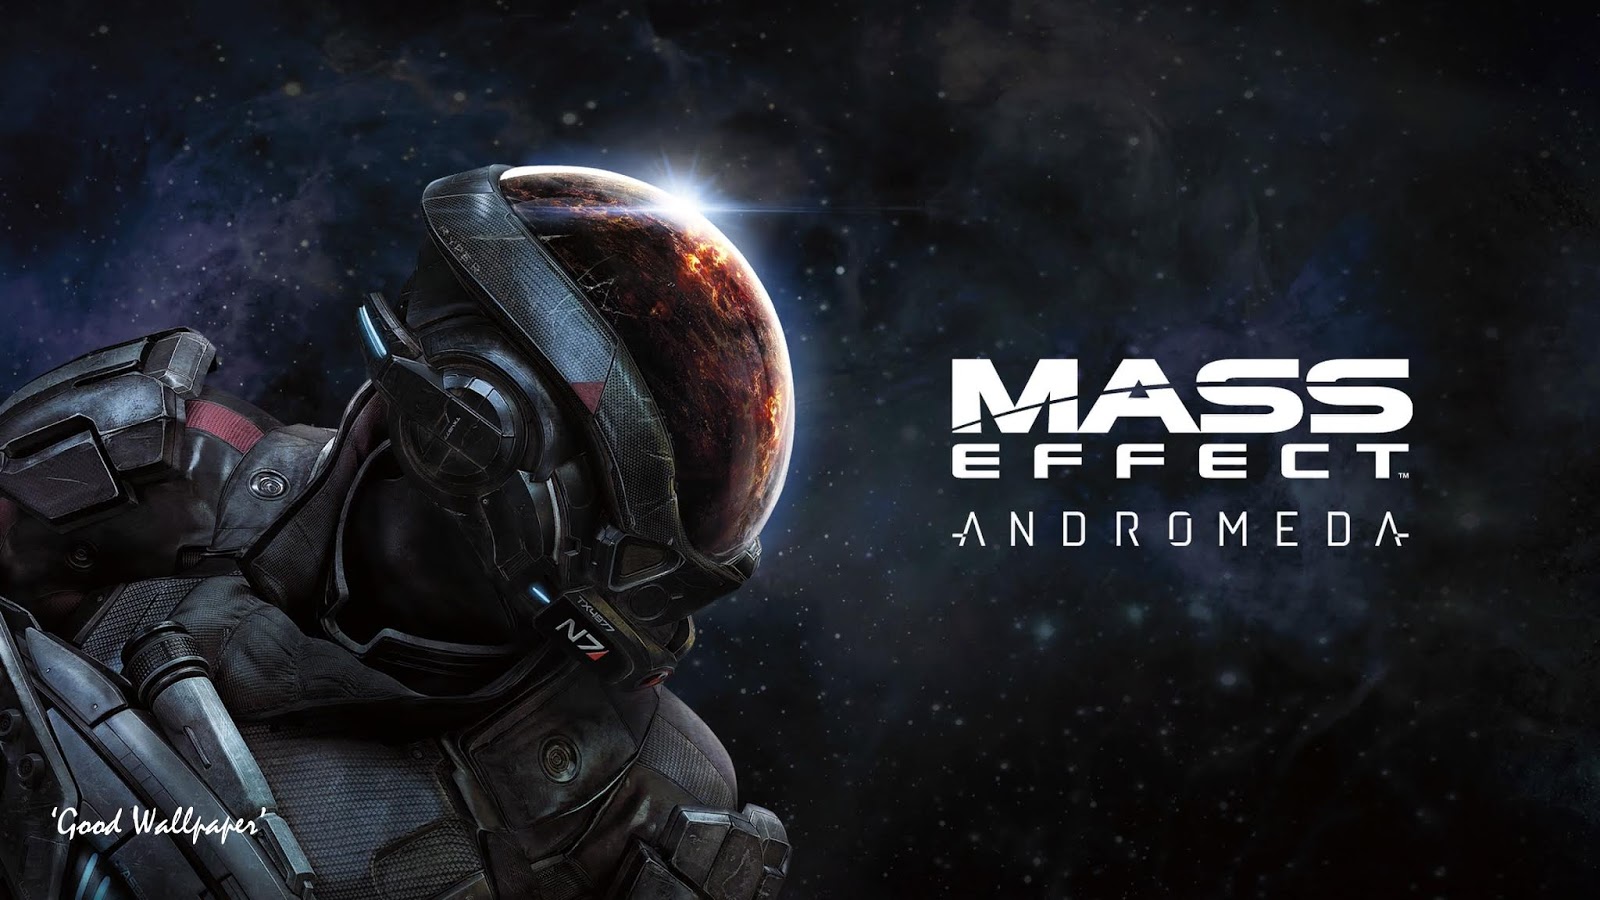 3d Mass Effect Andromeda Wallpaper Full Hd 4k 1920x1080 Amazing